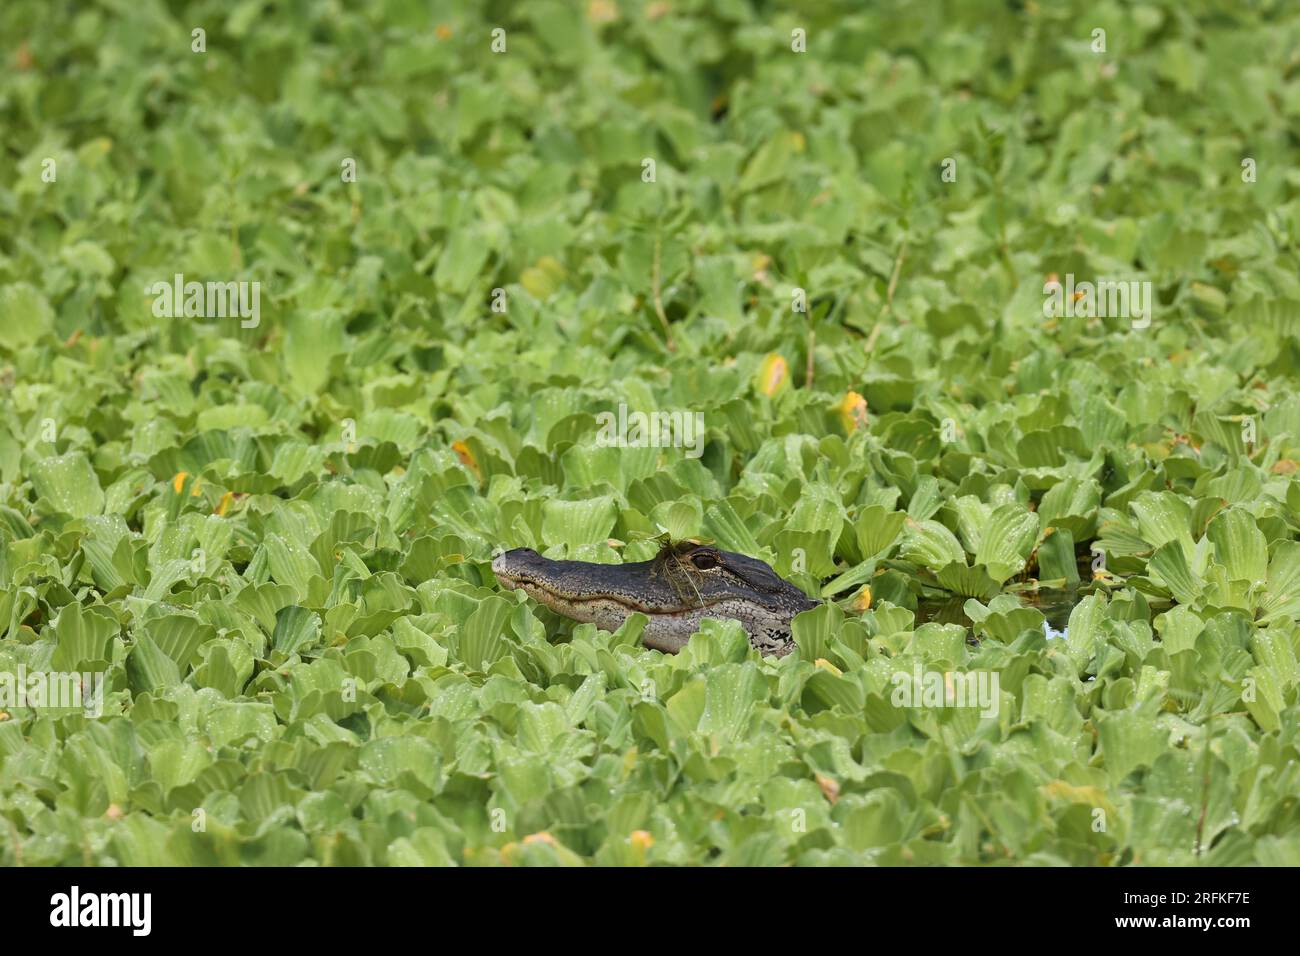 Florida Alligator Foto Stock